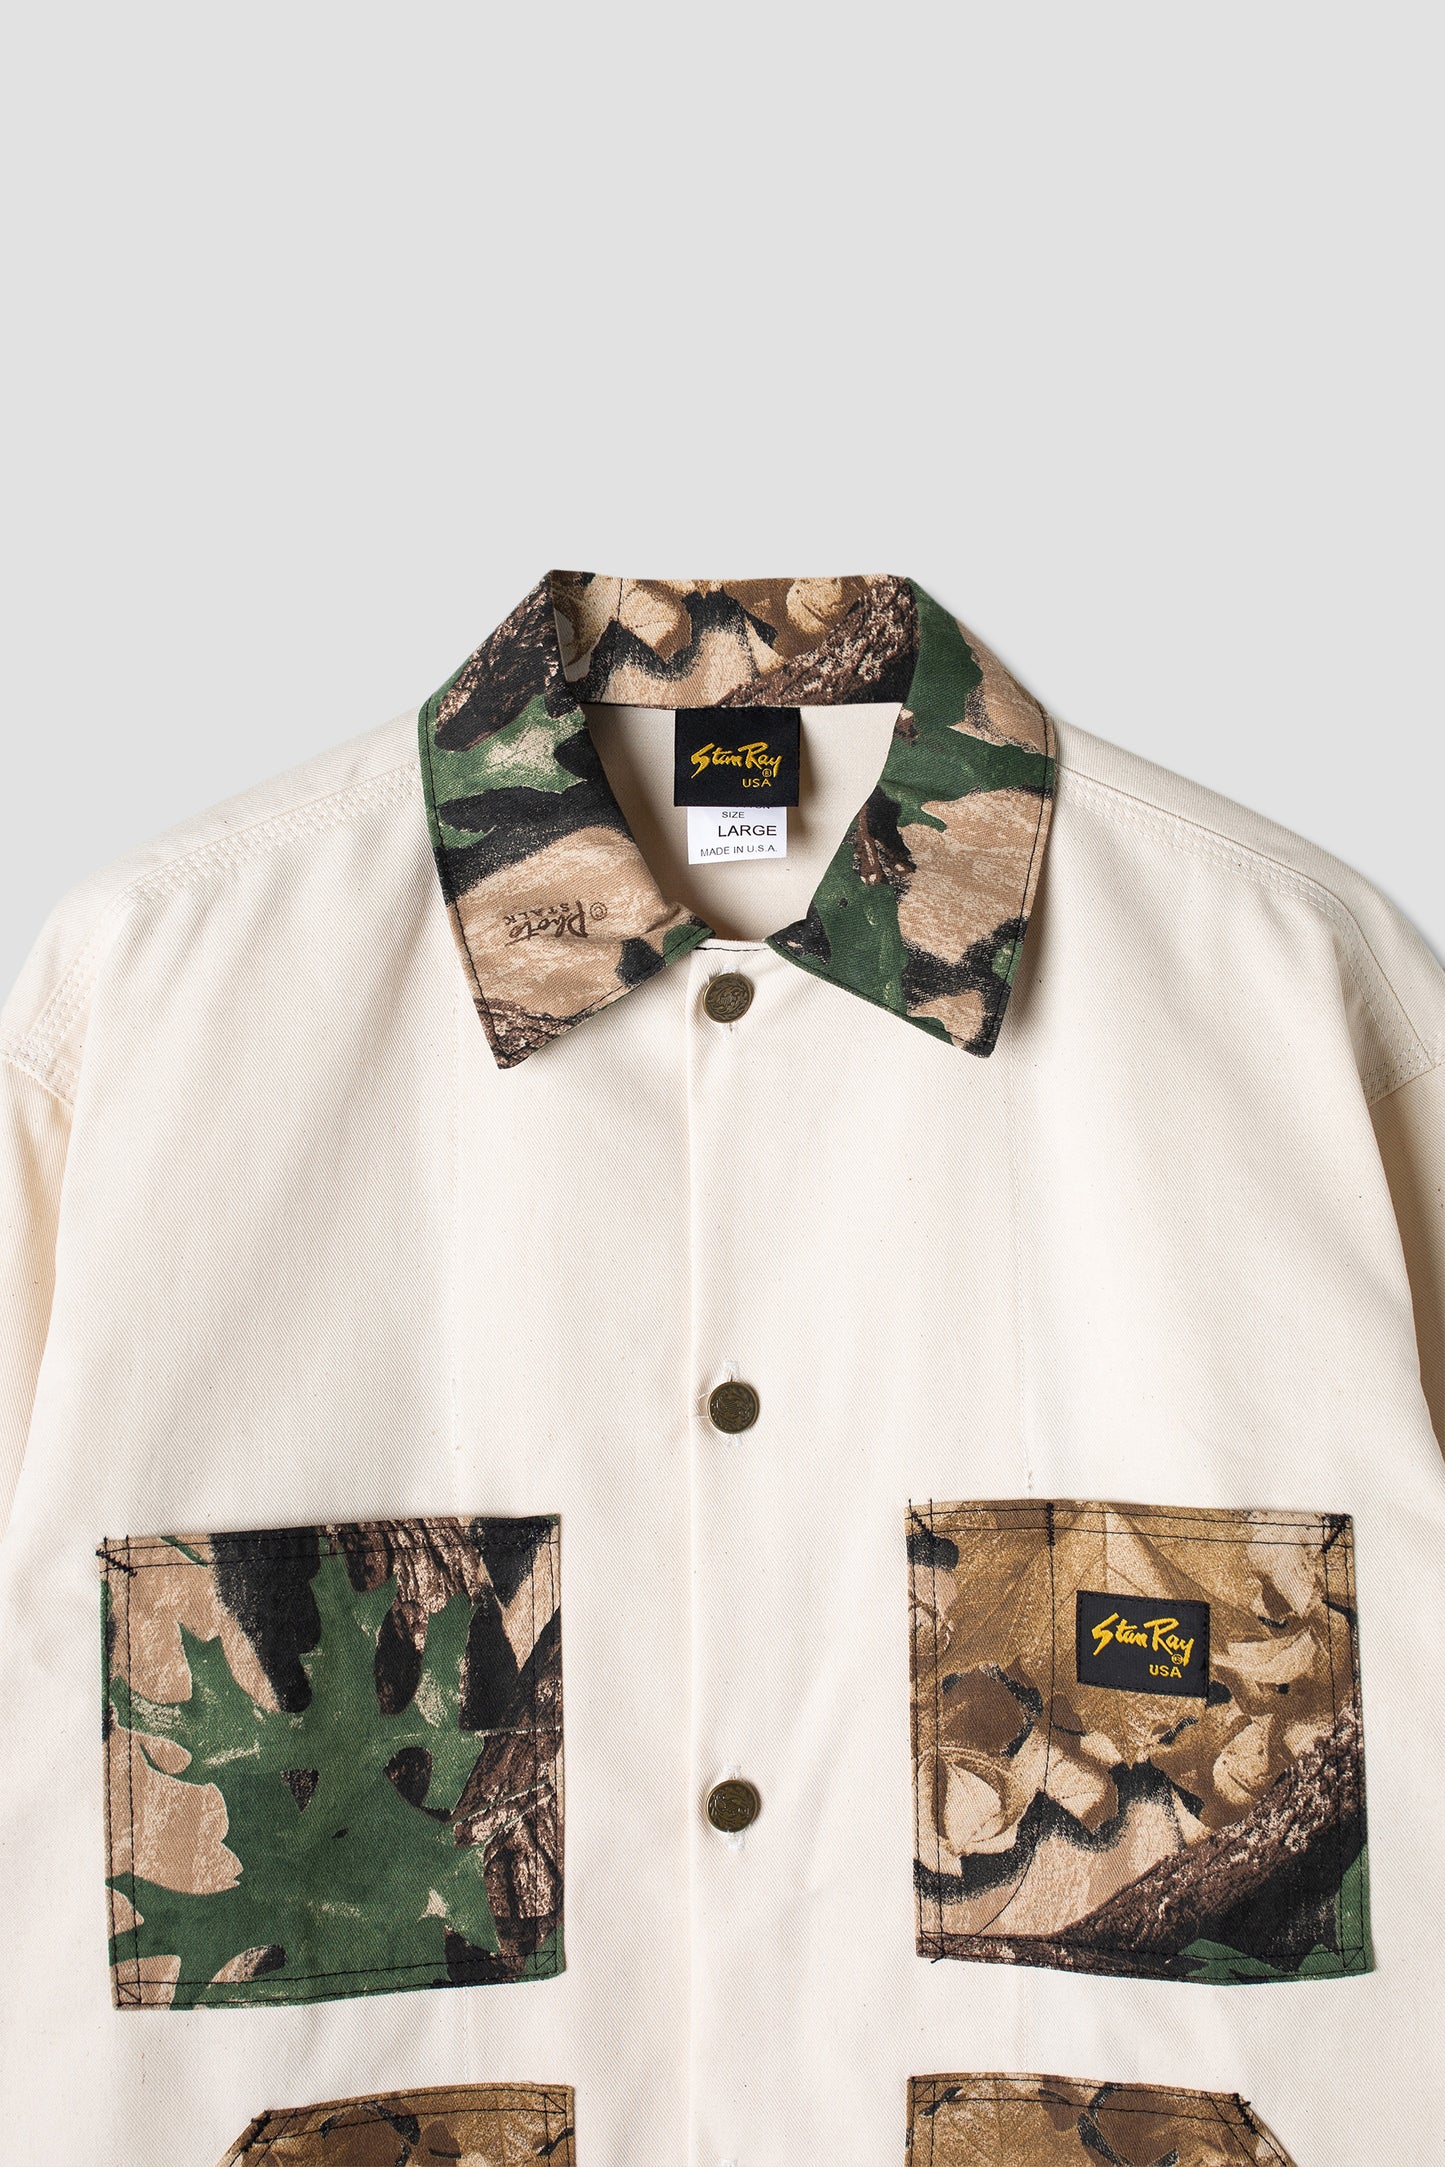 Shop Jacket (Natural/Forest Photo Stalk Camo)